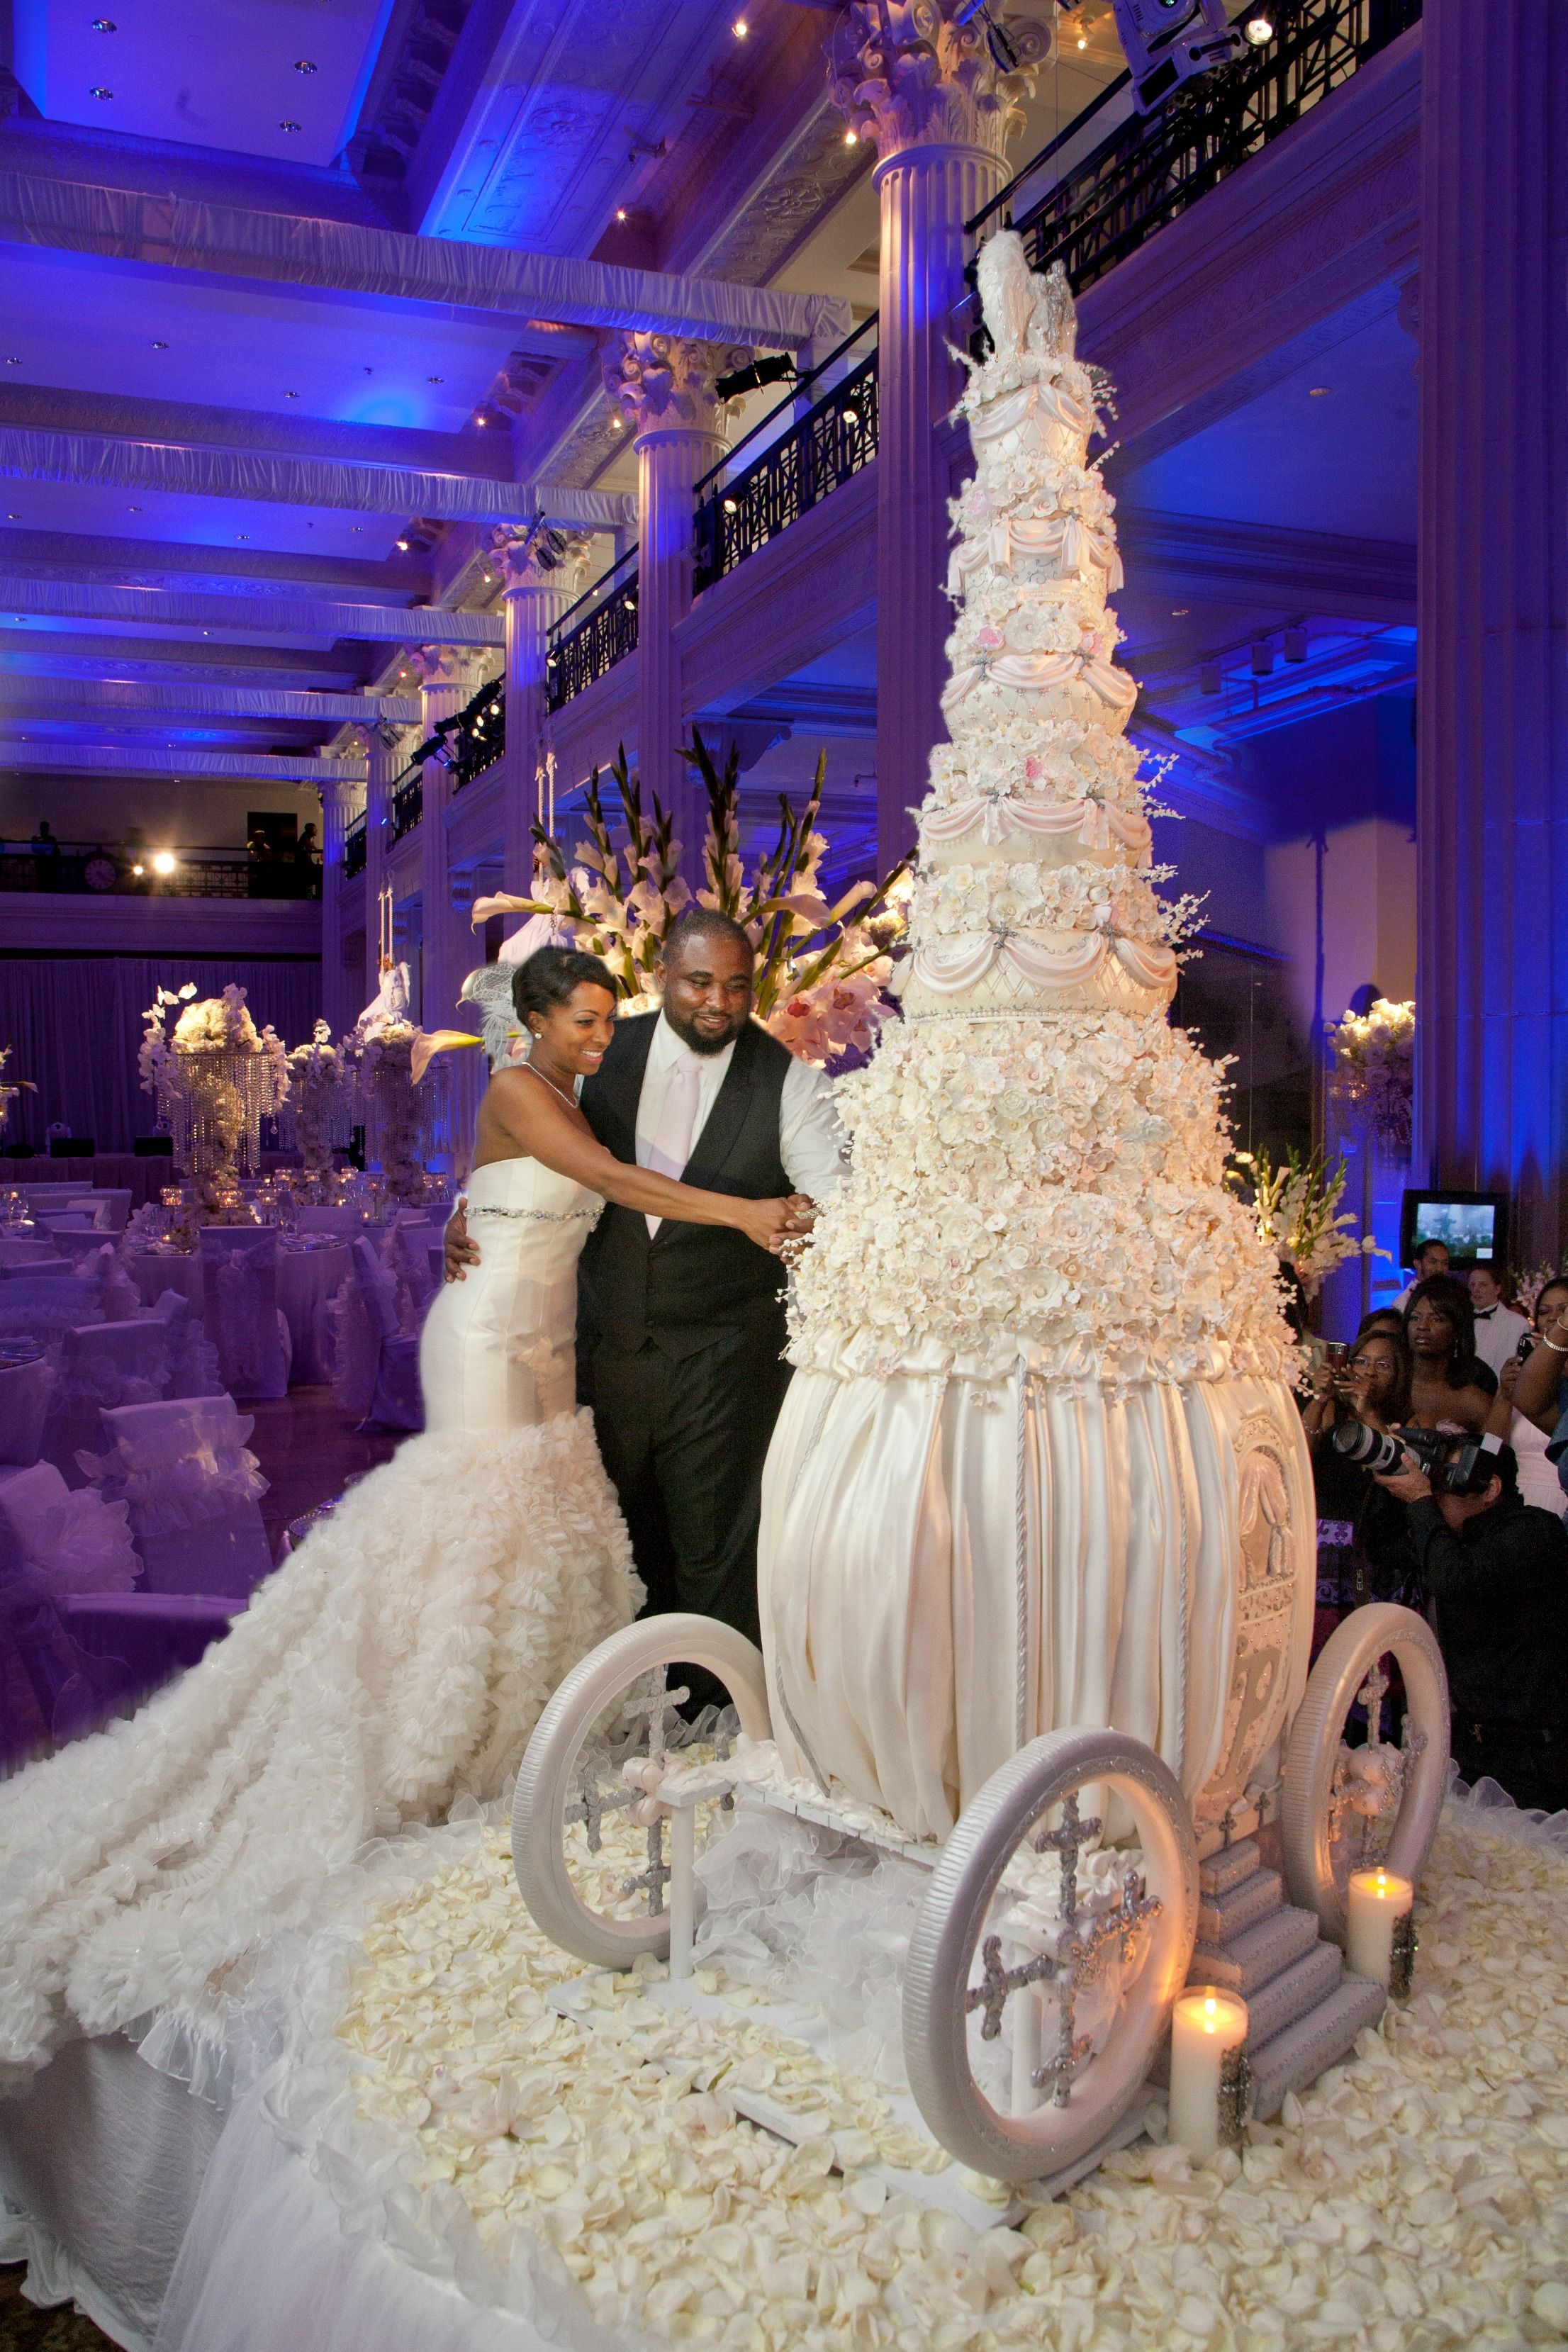 The 8 Best Wedding Cake Ideas — The DIY Bride's Boutique